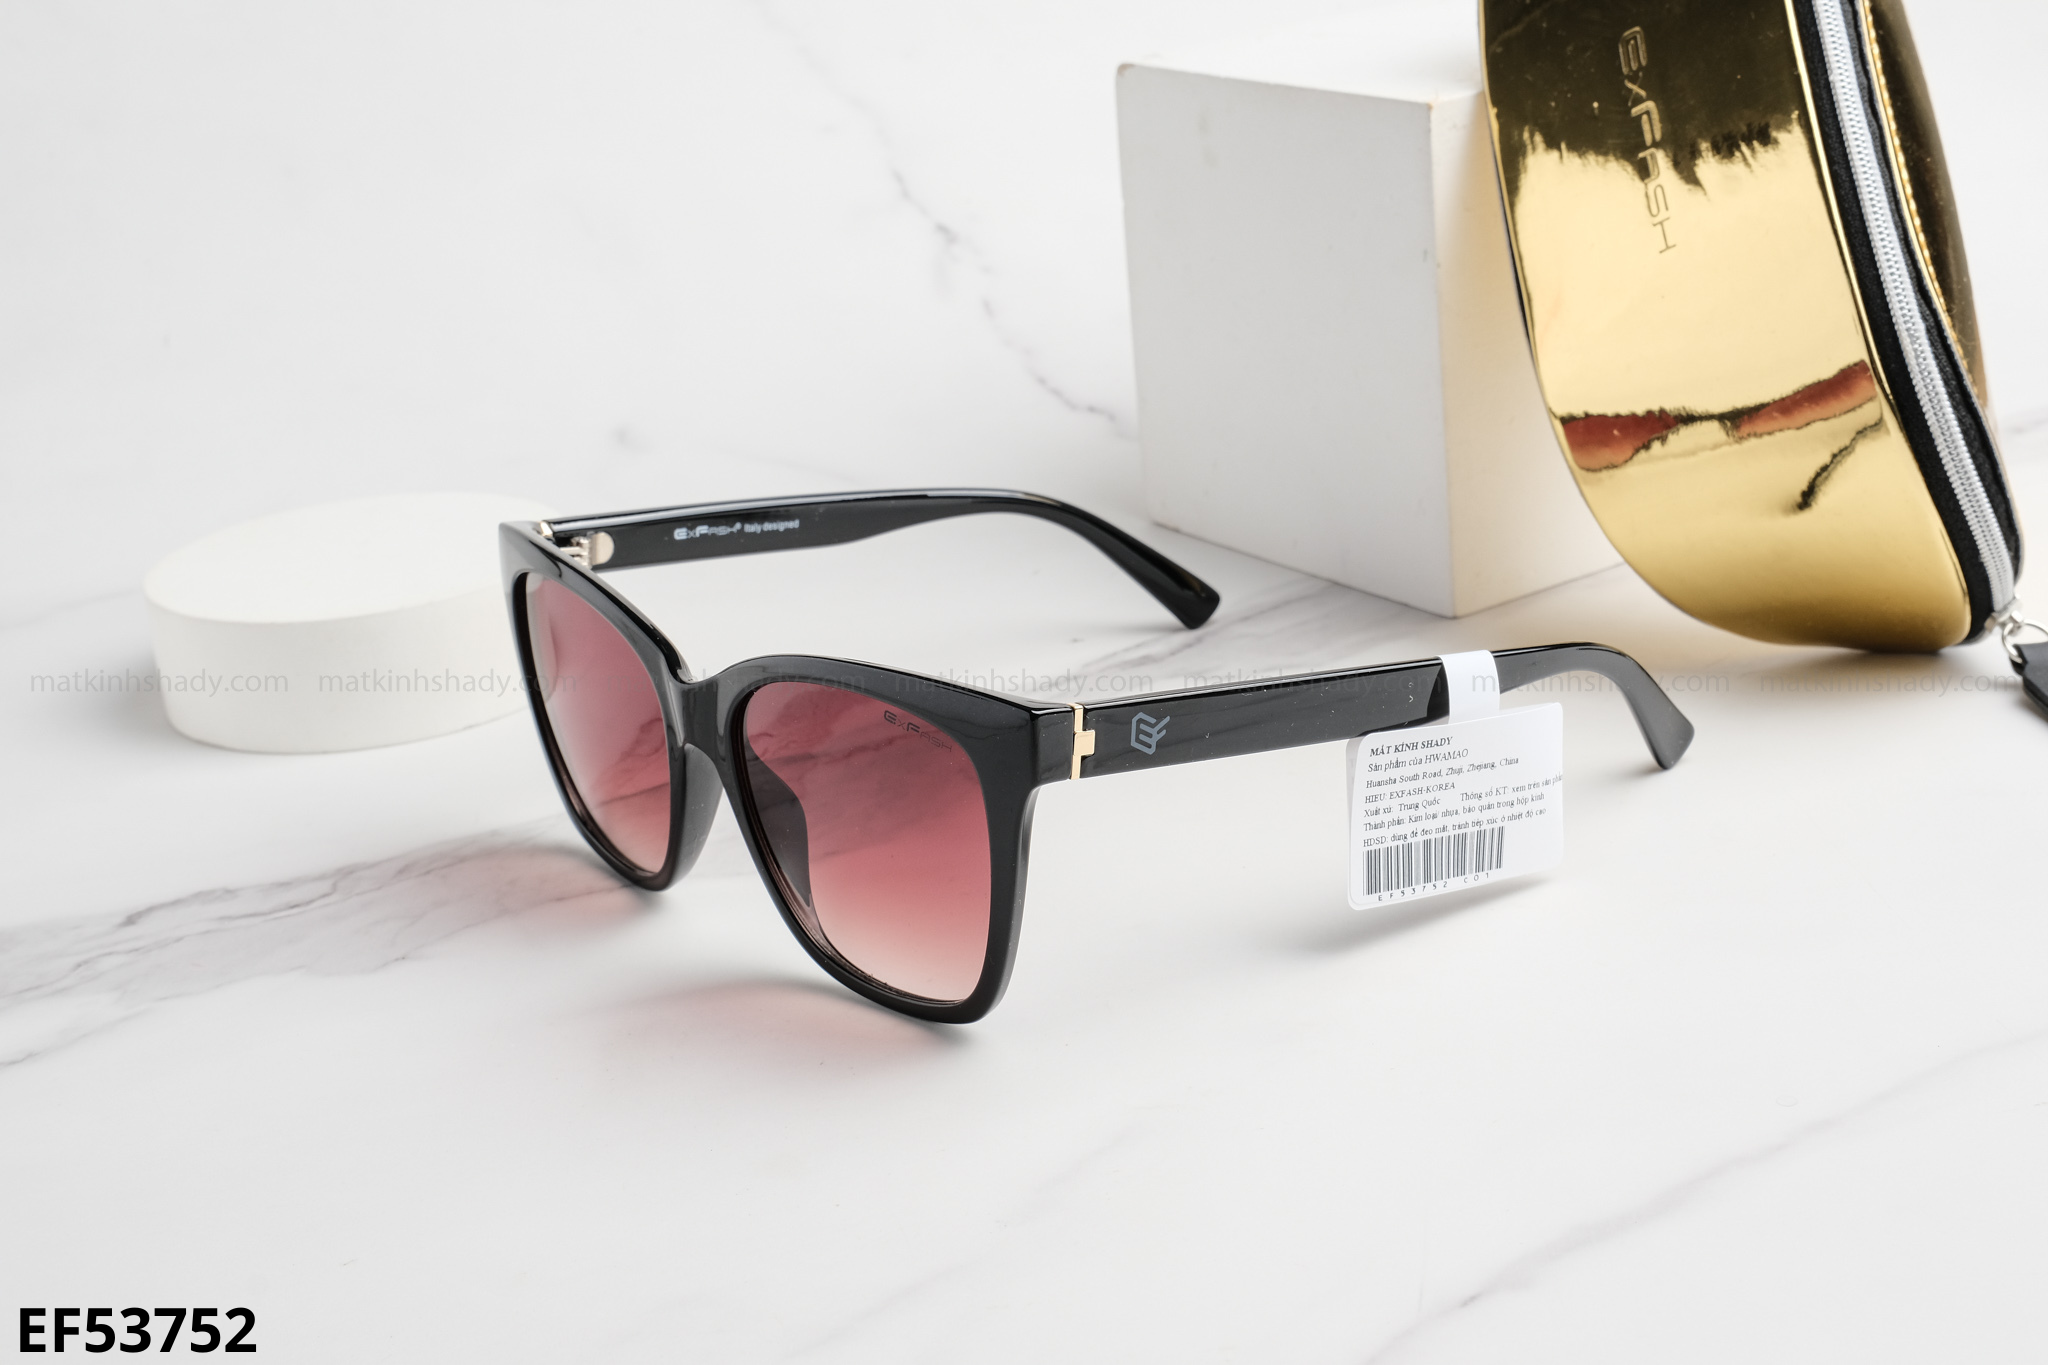  Exfash Eyewear - Sunglasses - EF53752 